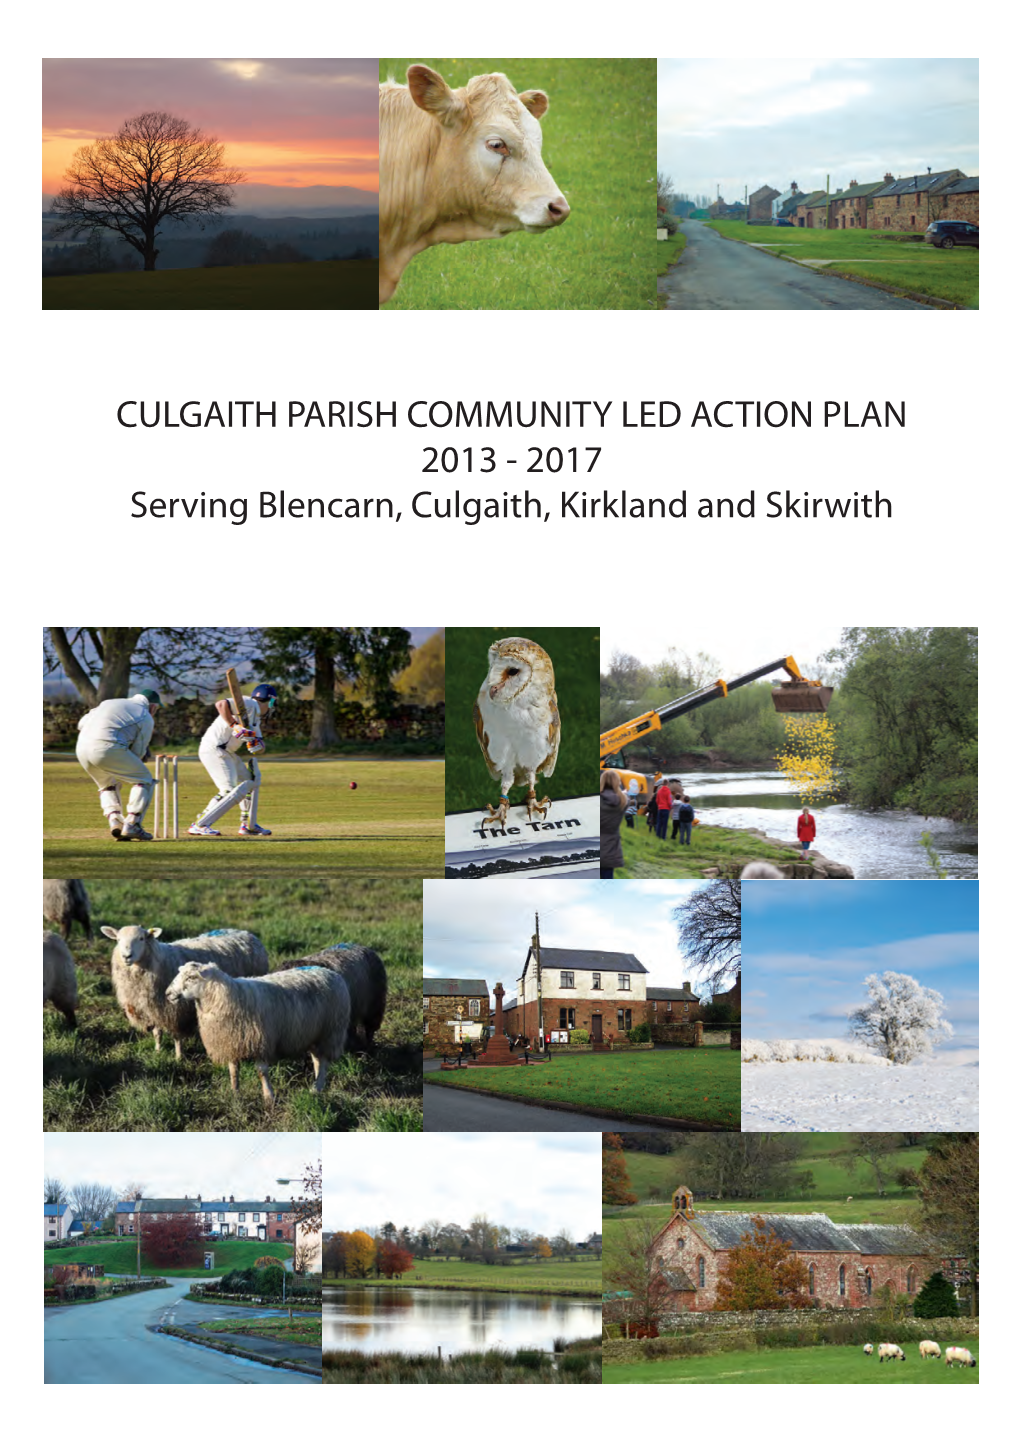 CULGAITH PARISH COMMUNITY LED ACTION PLAN 2013 - 2017 Serving Blencarn, Culgaith, Kirkland and Skirwith